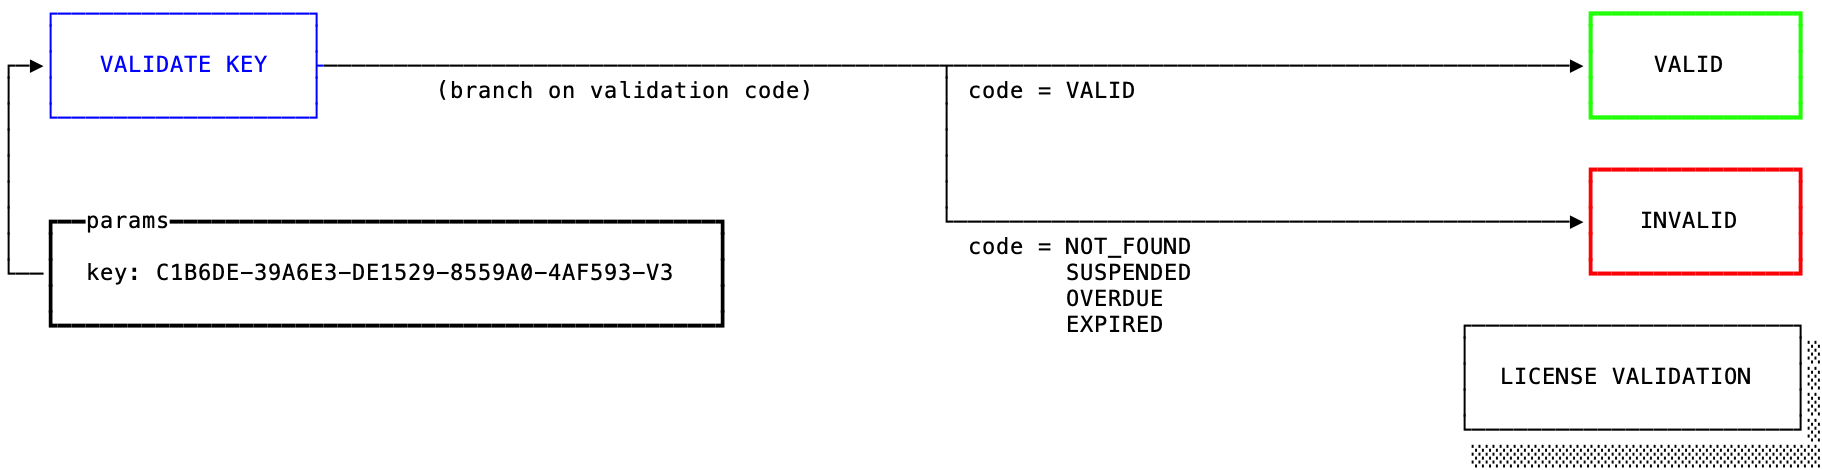 Diagram of validating a perpetual license key